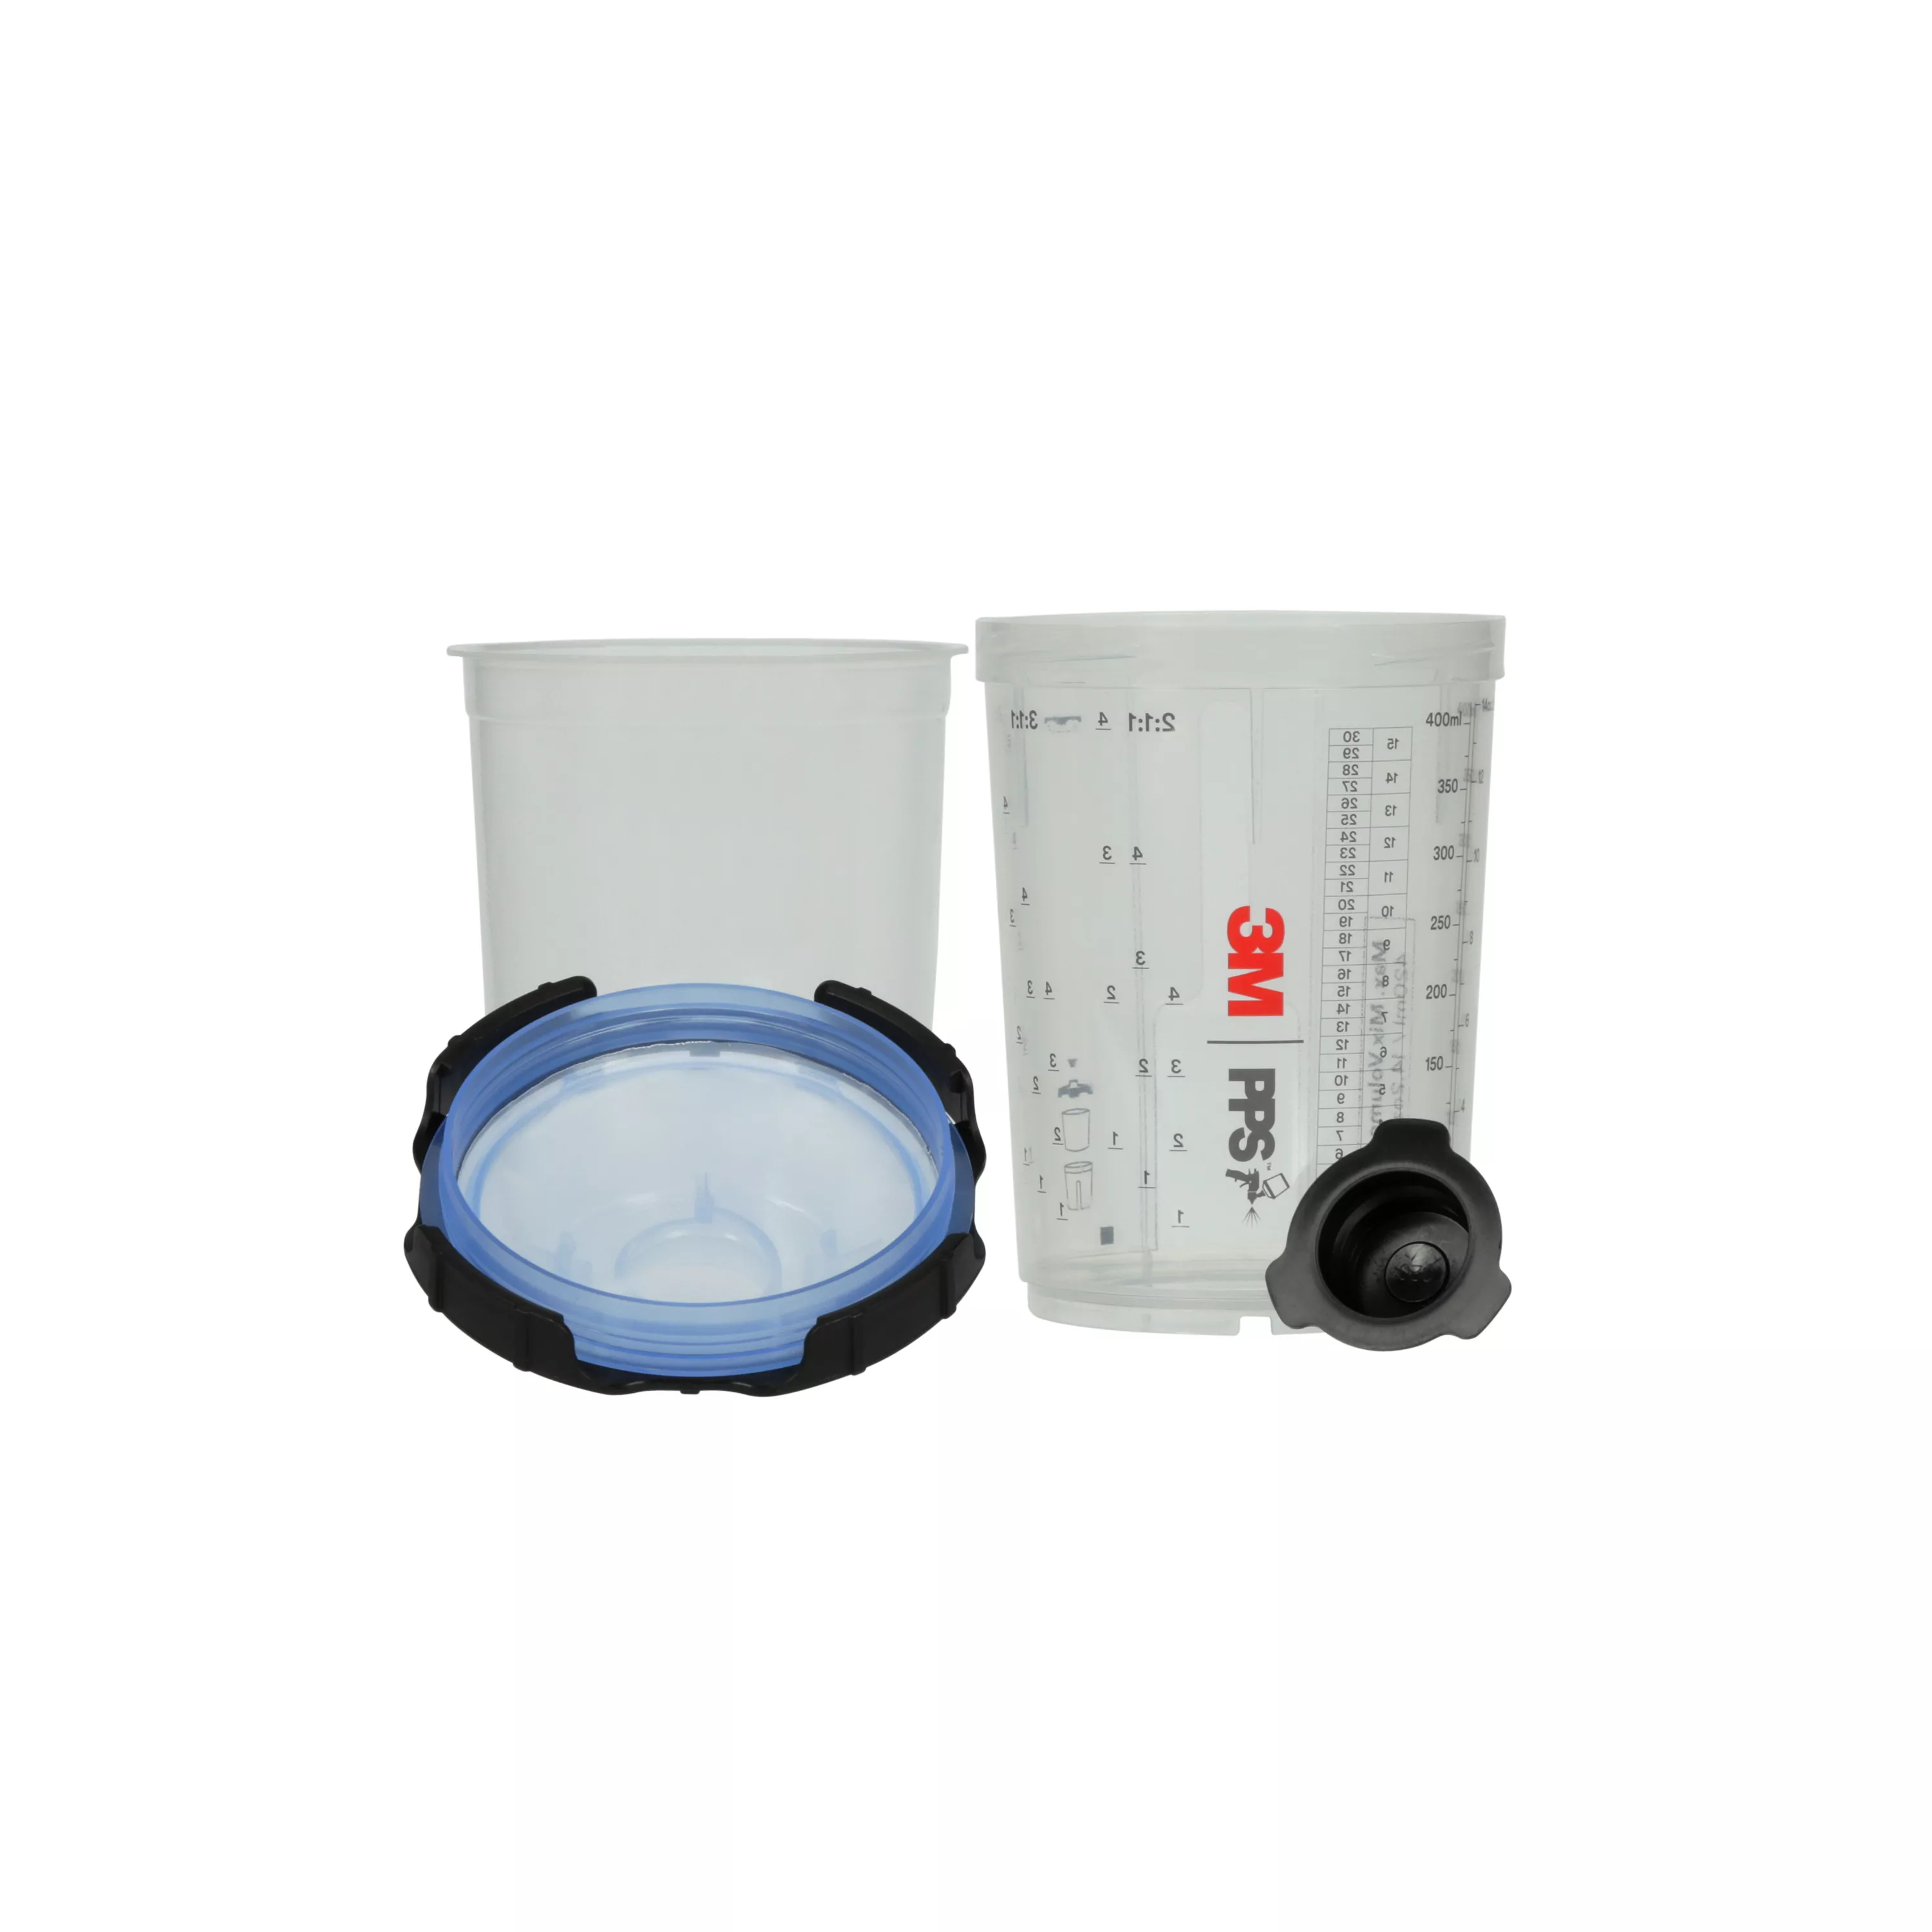 3M™ PPS™ Series 2.0 Spray Cup System Kit, 26312, Midi (13.5 fl oz, 400
mL), 125 Micron Filter, 1 kit per case